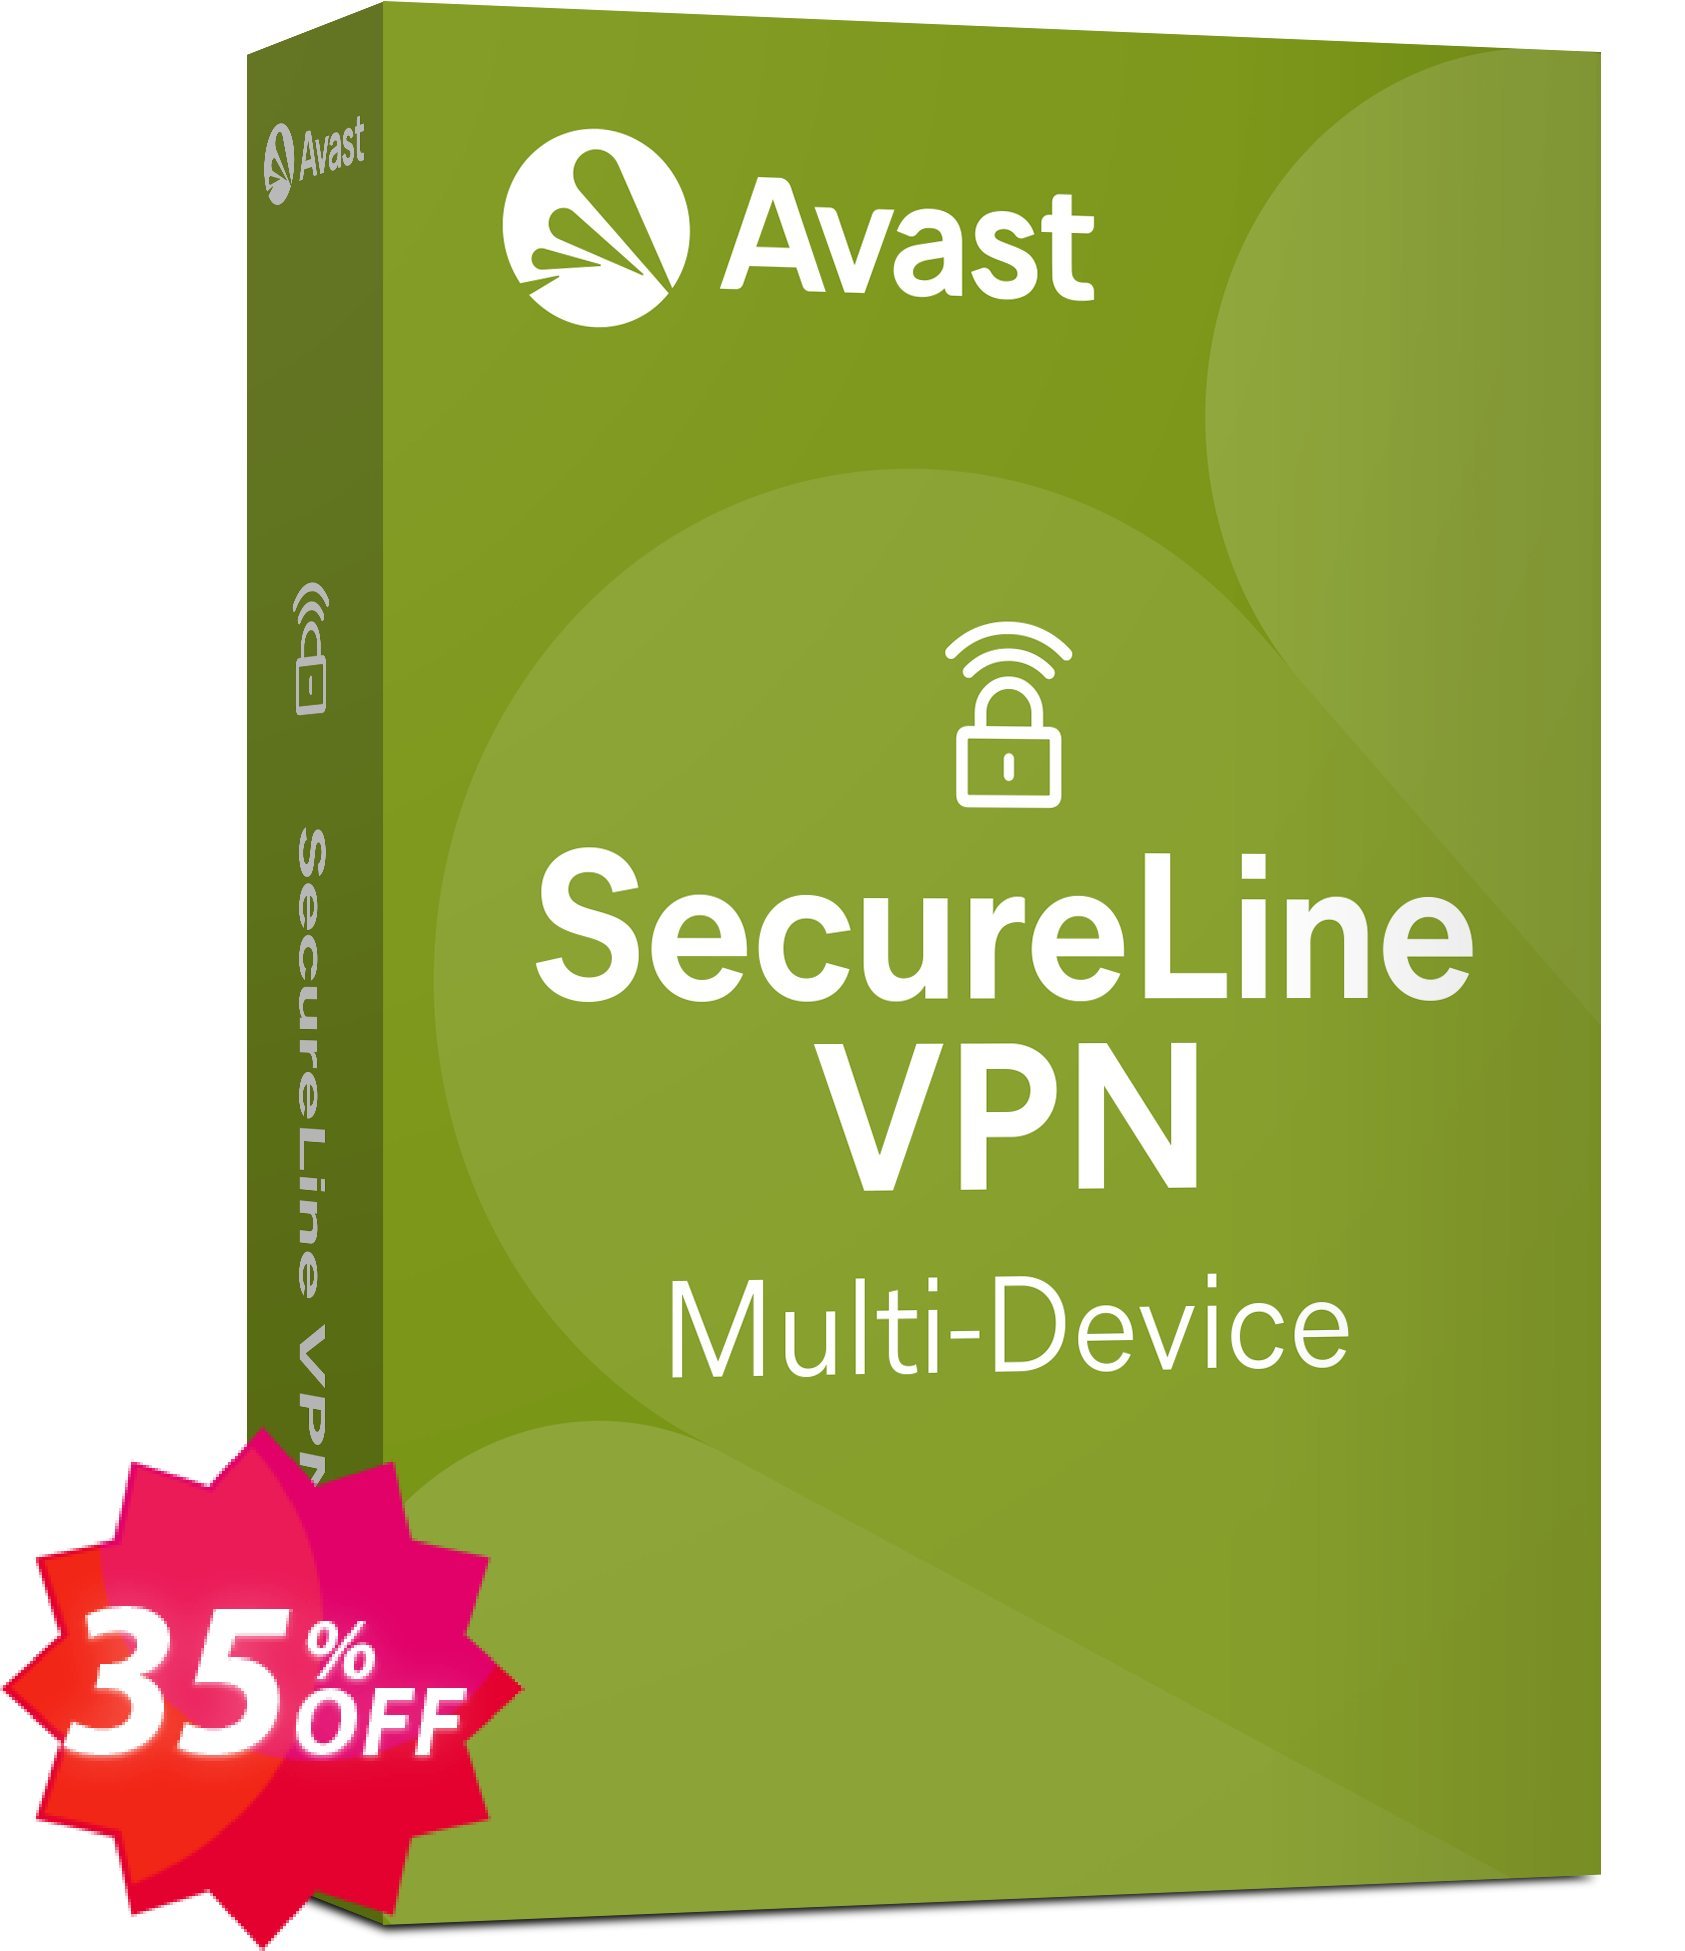 Avast SecureLine VPN Coupon code 35% discount 